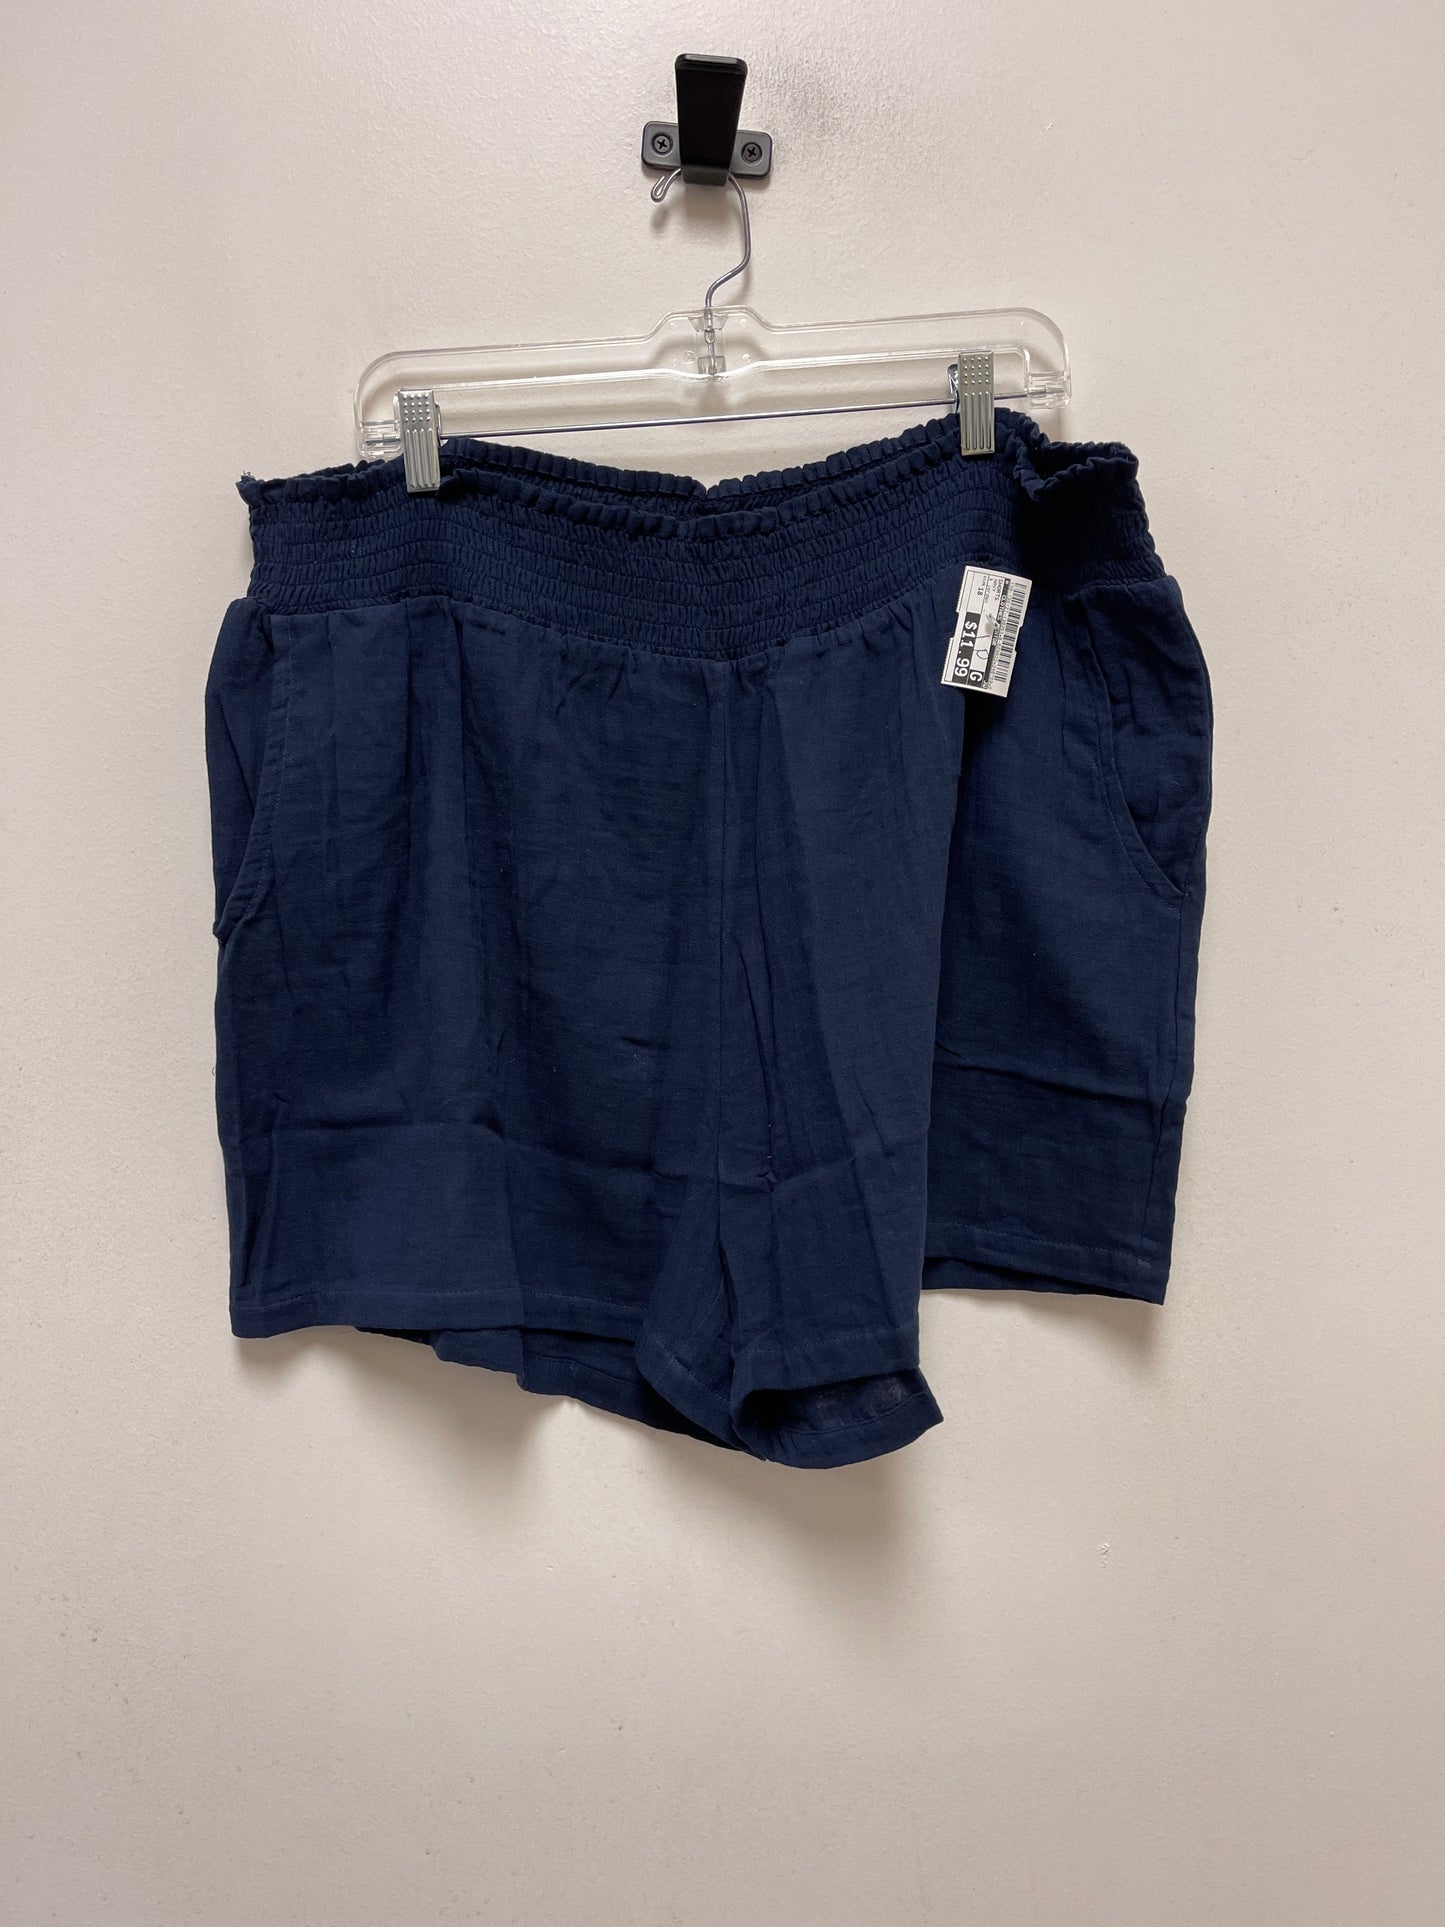 Navy Shorts Clothes Mentor, Size 18